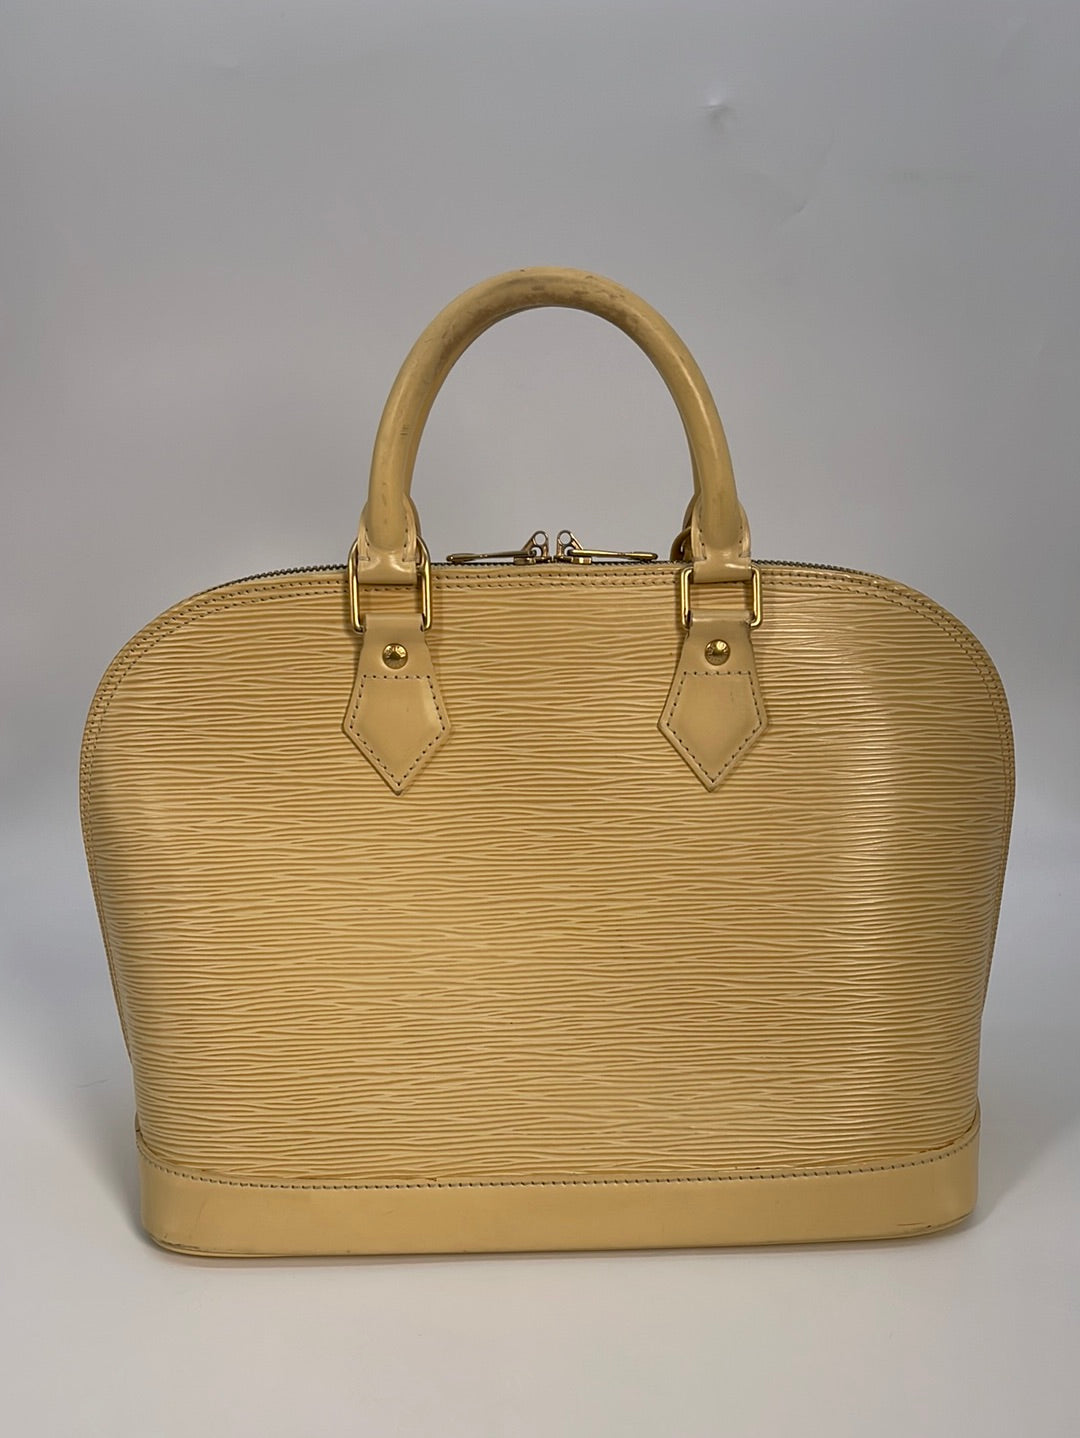 Louis Vuitton Alma Small Model Handbag in Vanilla Yellow Epi Leather